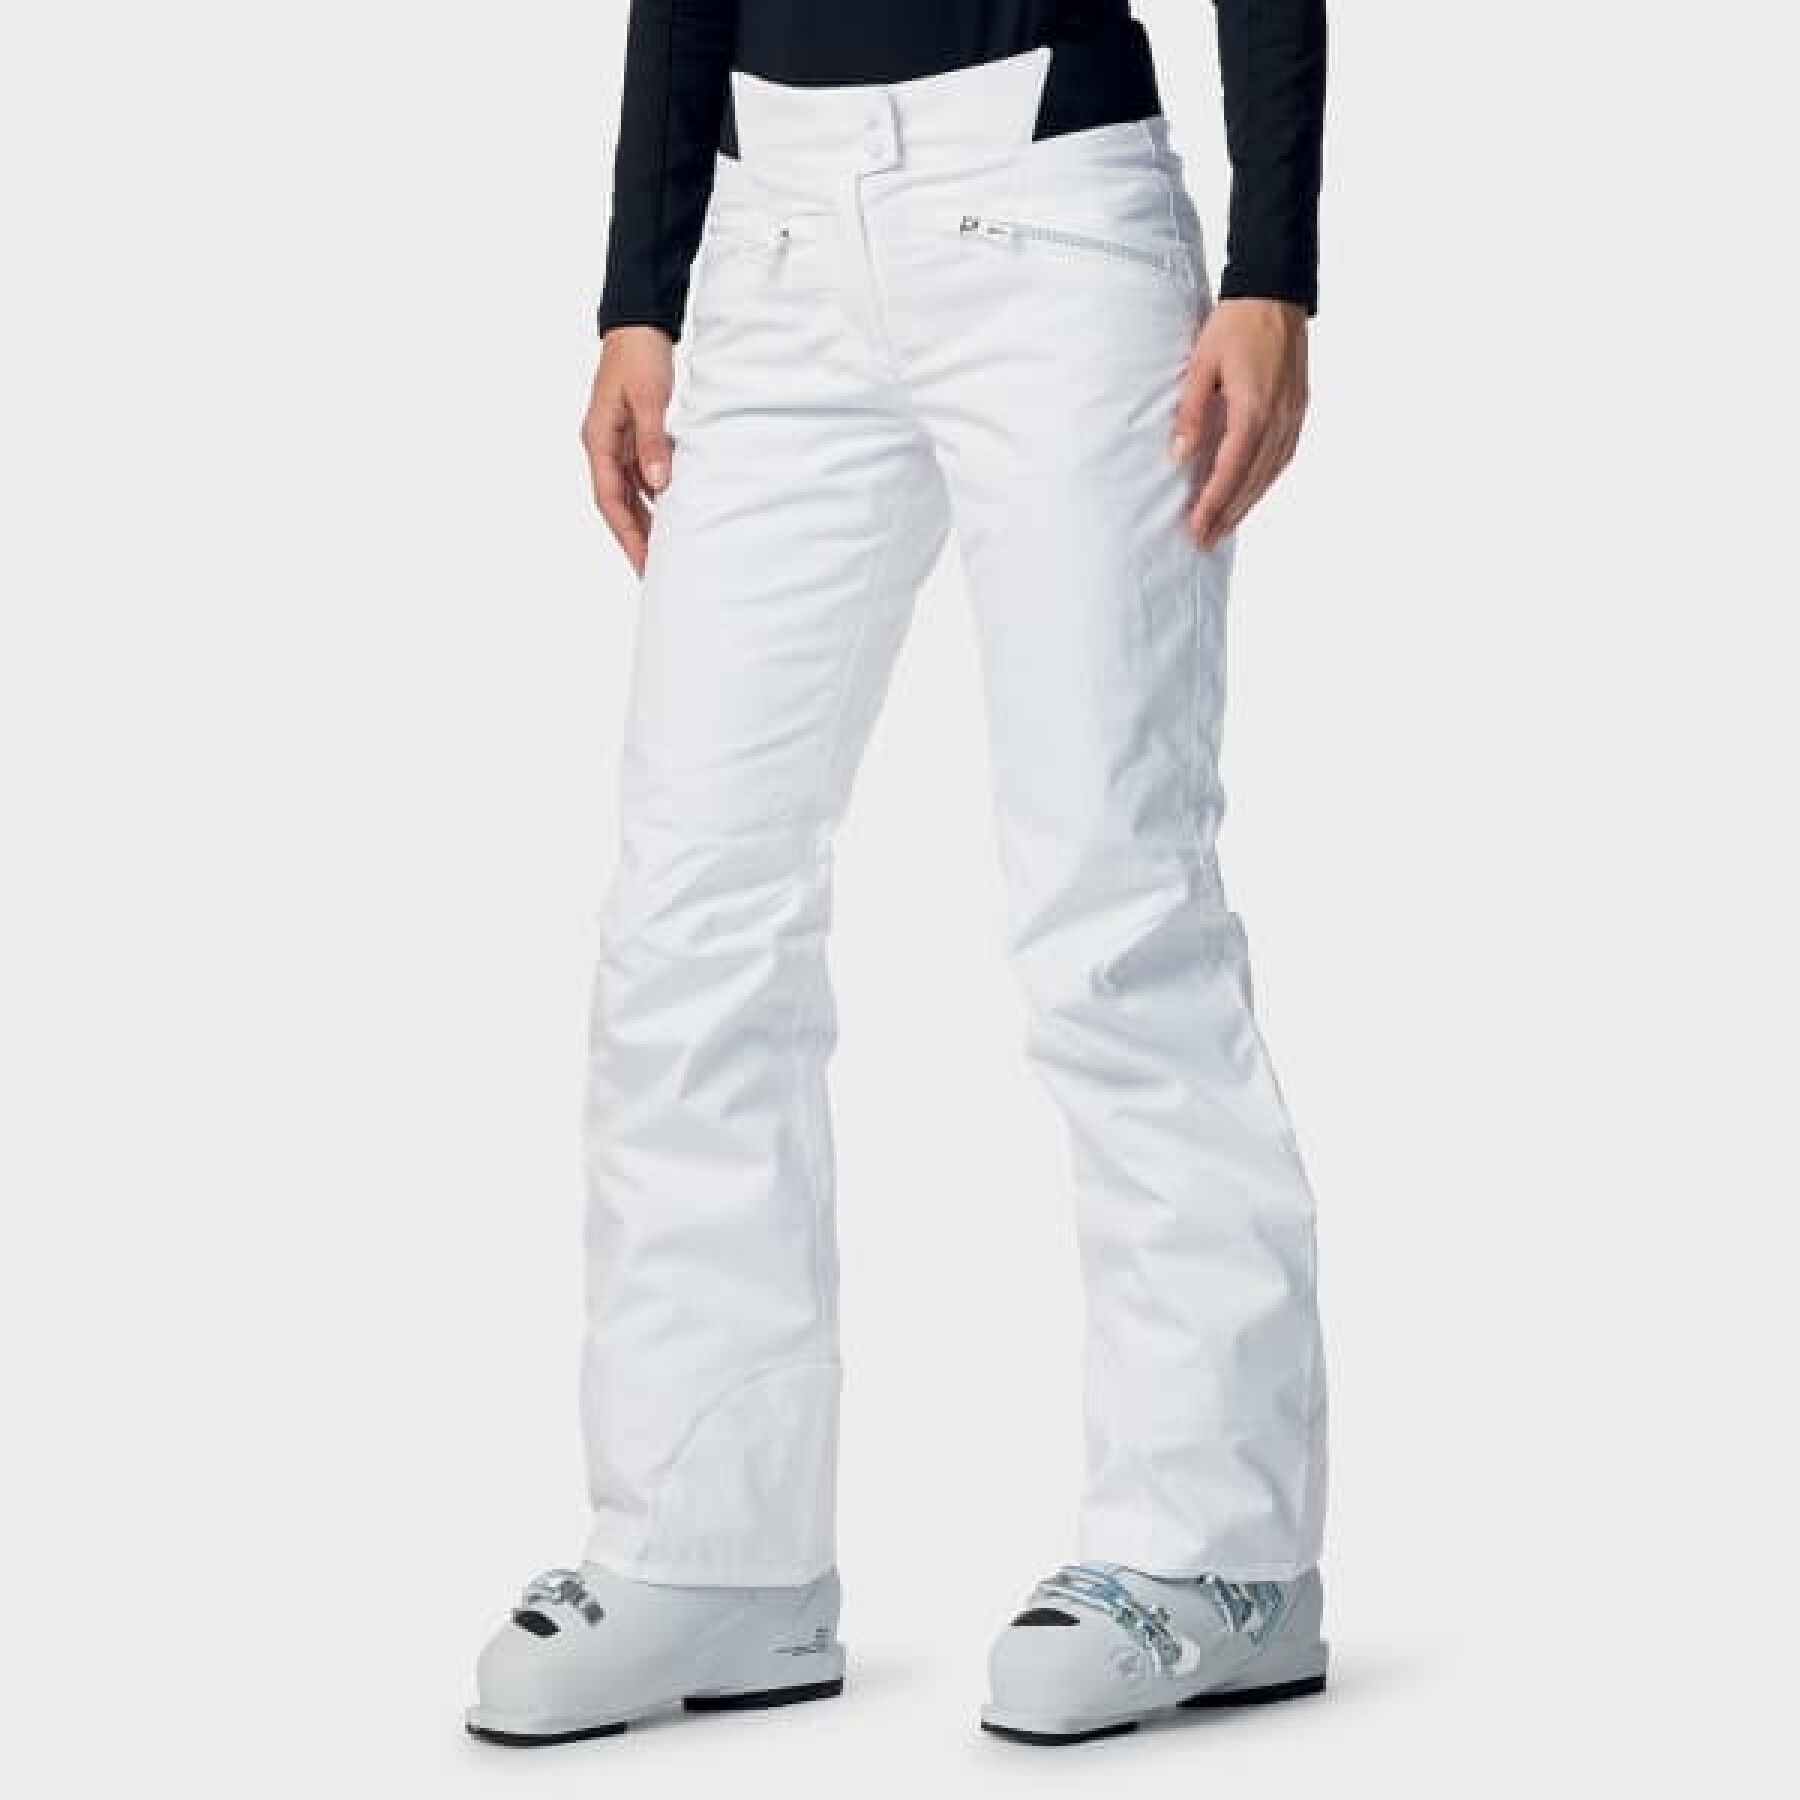 Women's ski pants Rossignol Classique